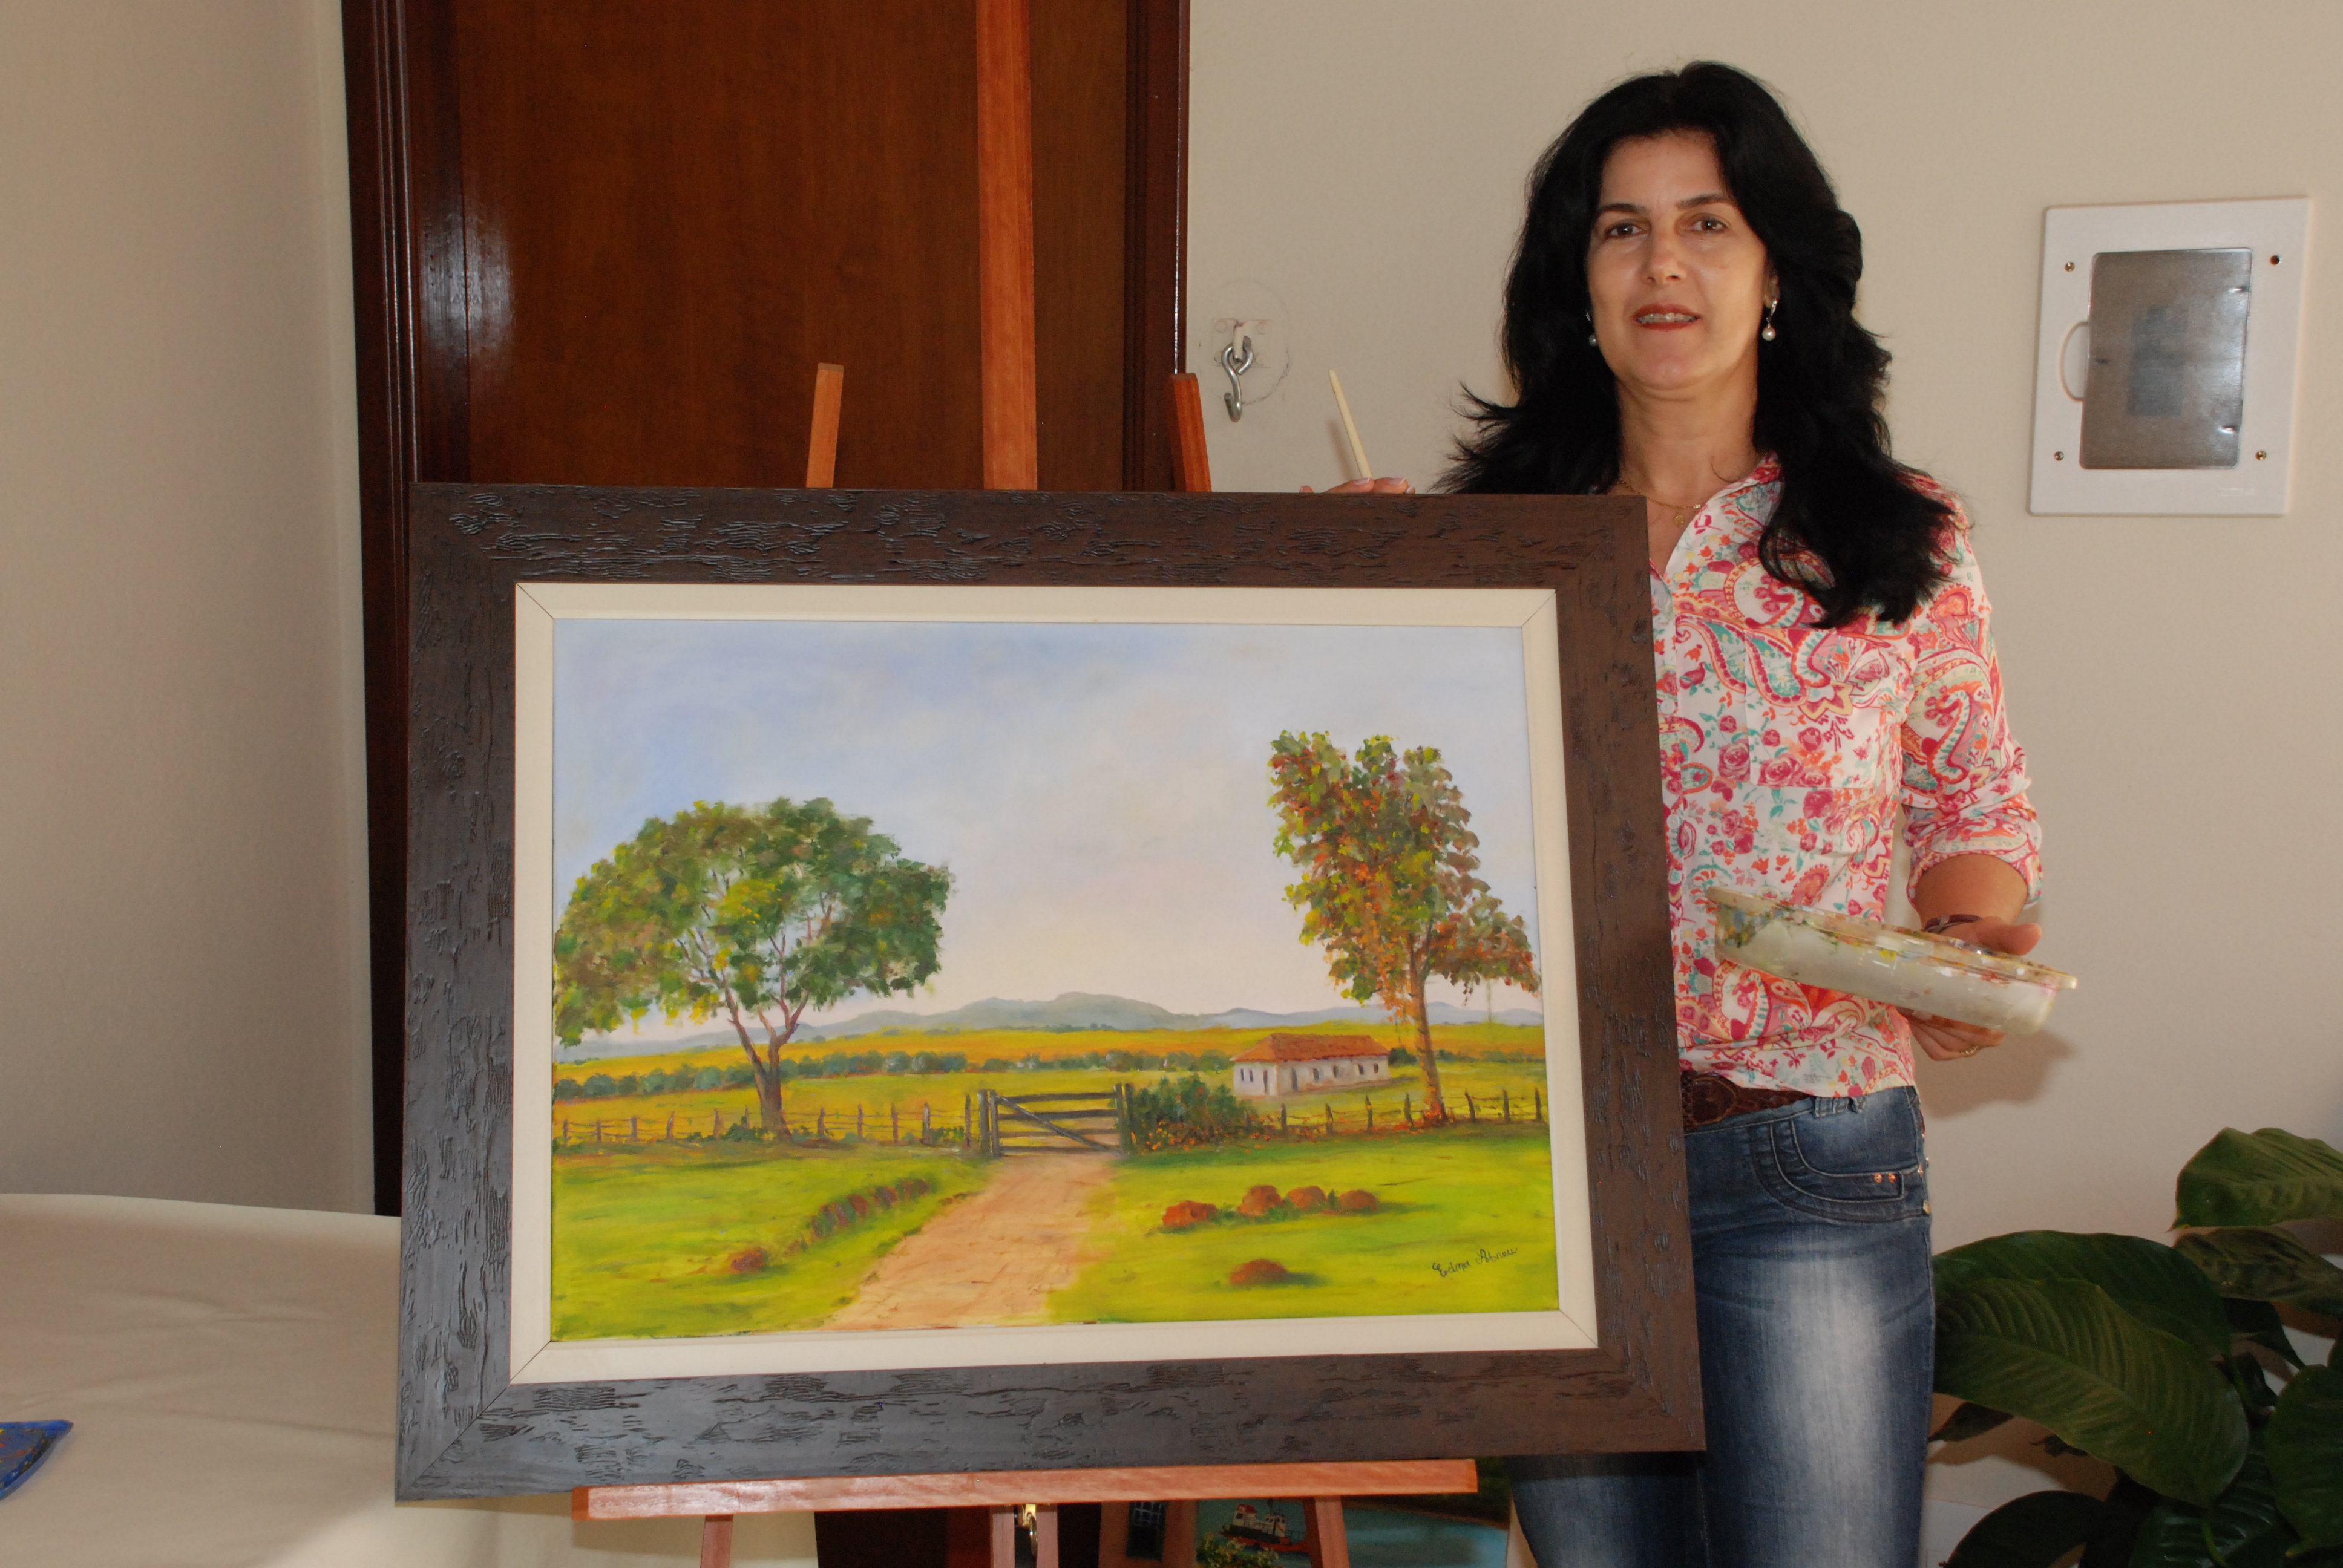 A artista Edna Abreu apresentará sua arte através de pinturas e artesanato